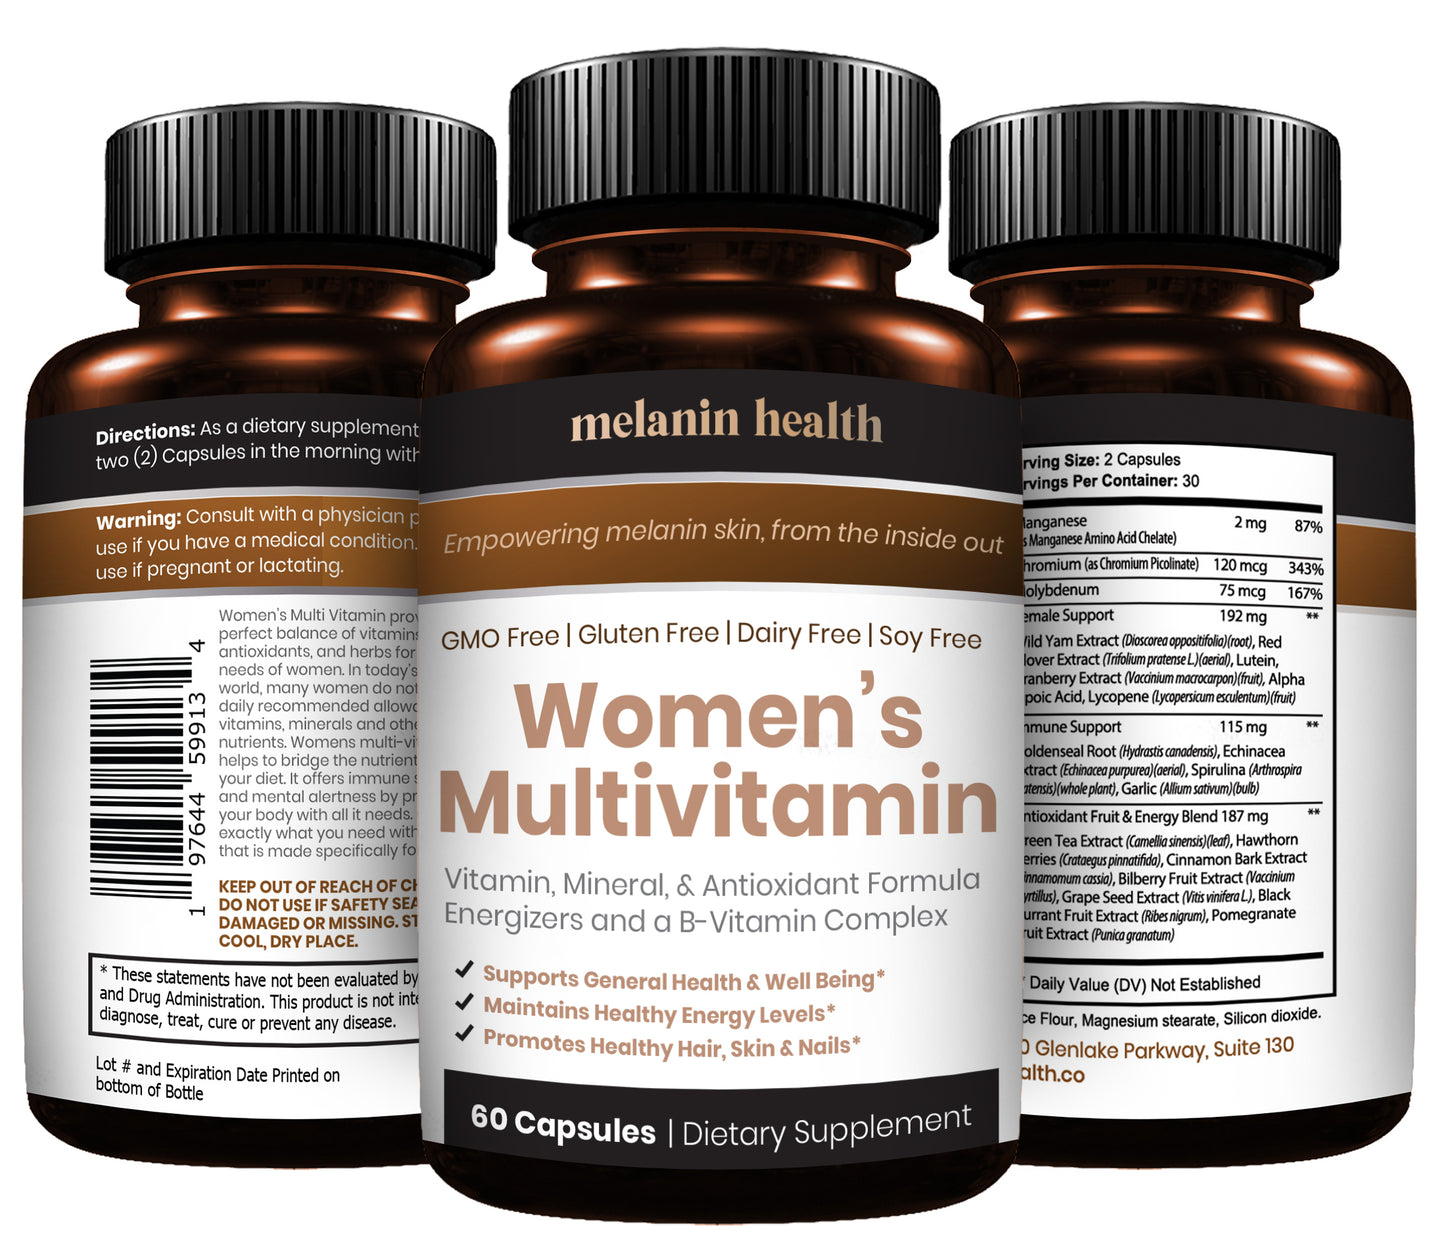 Melanin Health Women's Multivitamin